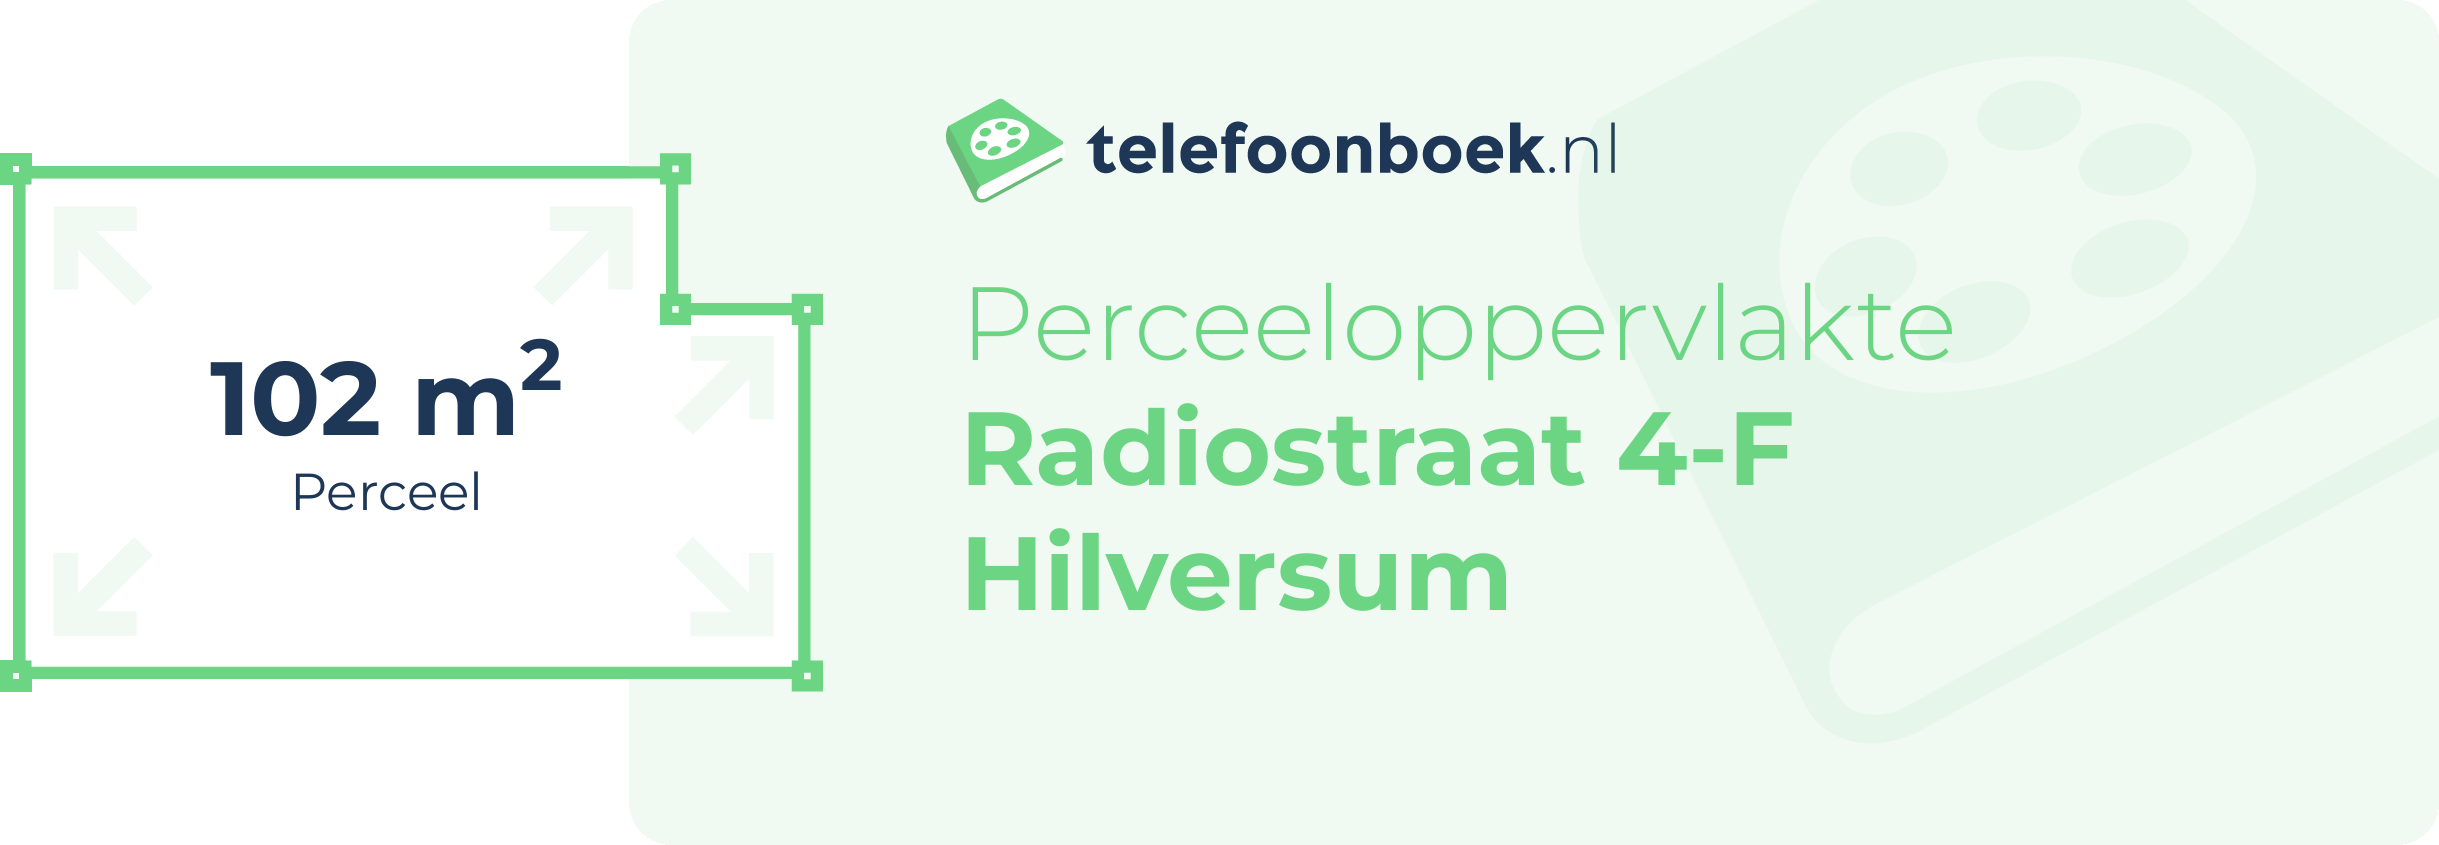 Perceeloppervlakte Radiostraat 4-F Hilversum